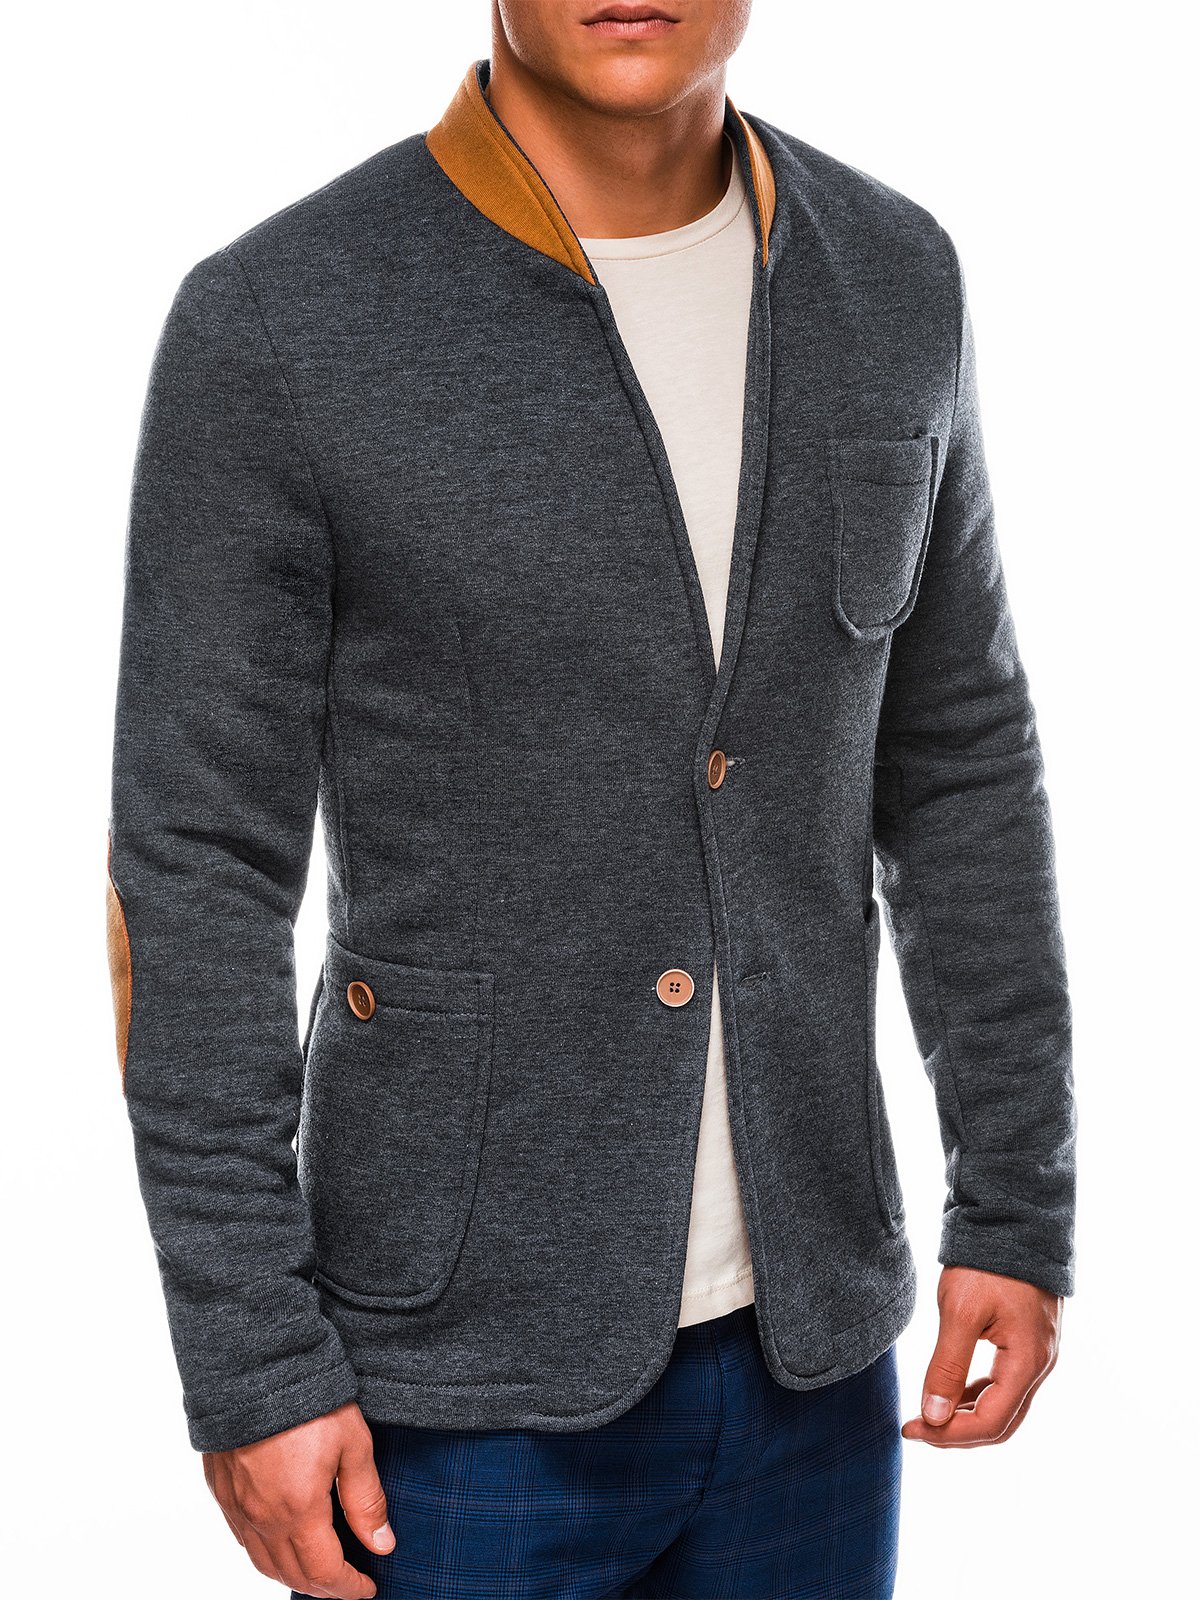 Men S Casual Blazer Jacket M07 Dark Grey Modone Wholesale Clothing For Men